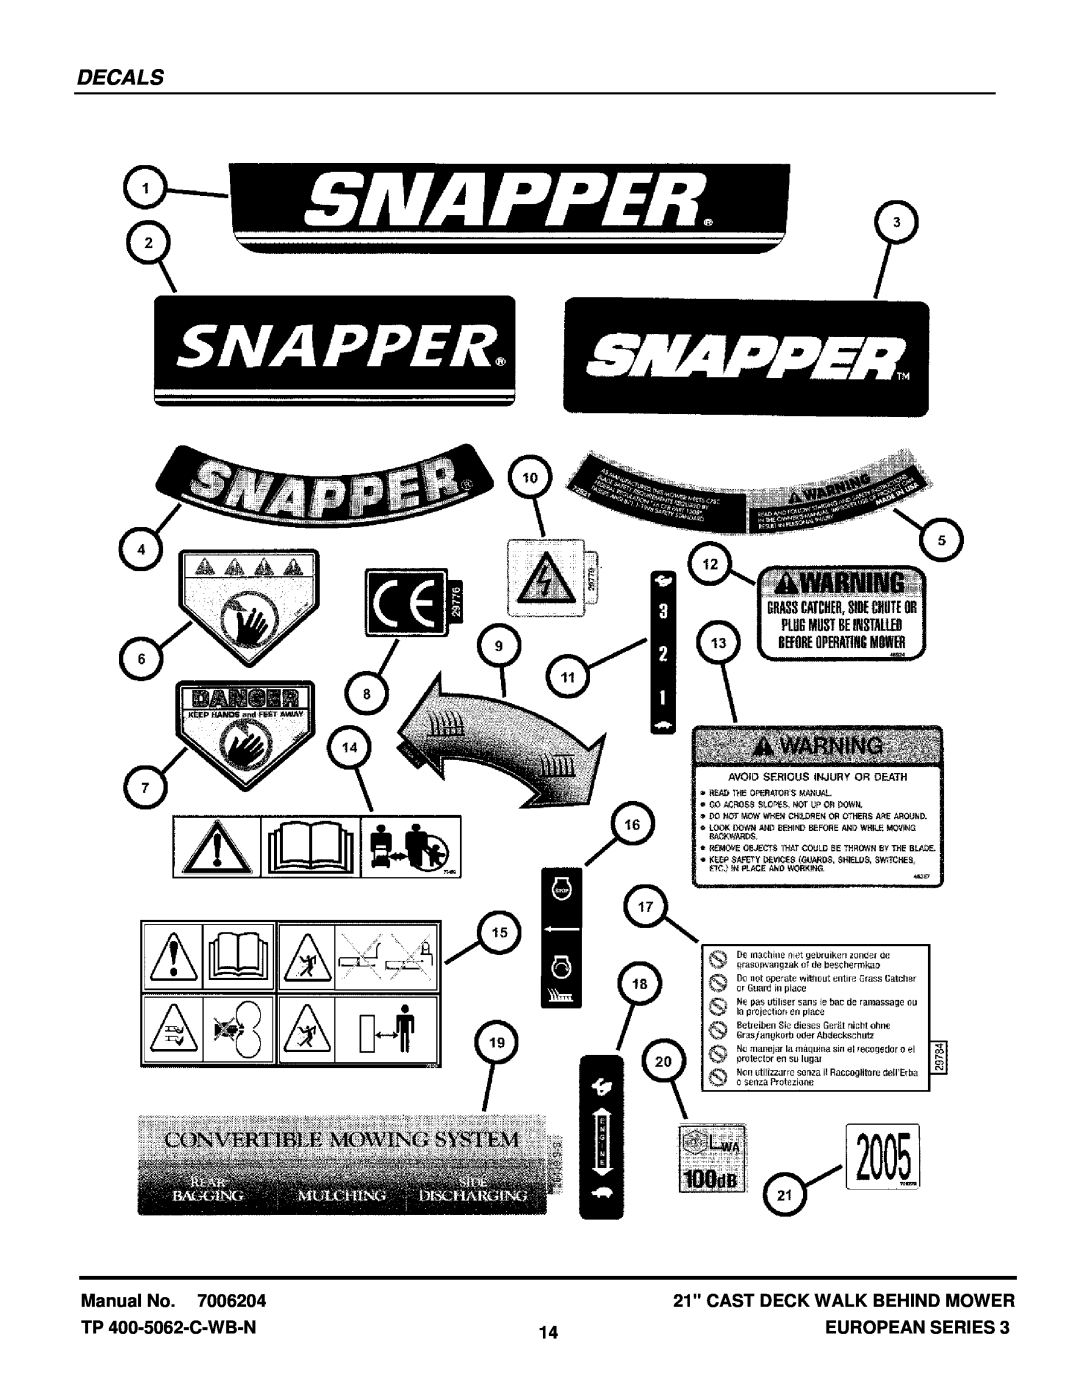 Snapper ELP21703BV(7800121) manual Decals, Manual No, Cast Deck Walk Behind Mower, TP 400-5062-C-WB-N, European Series 